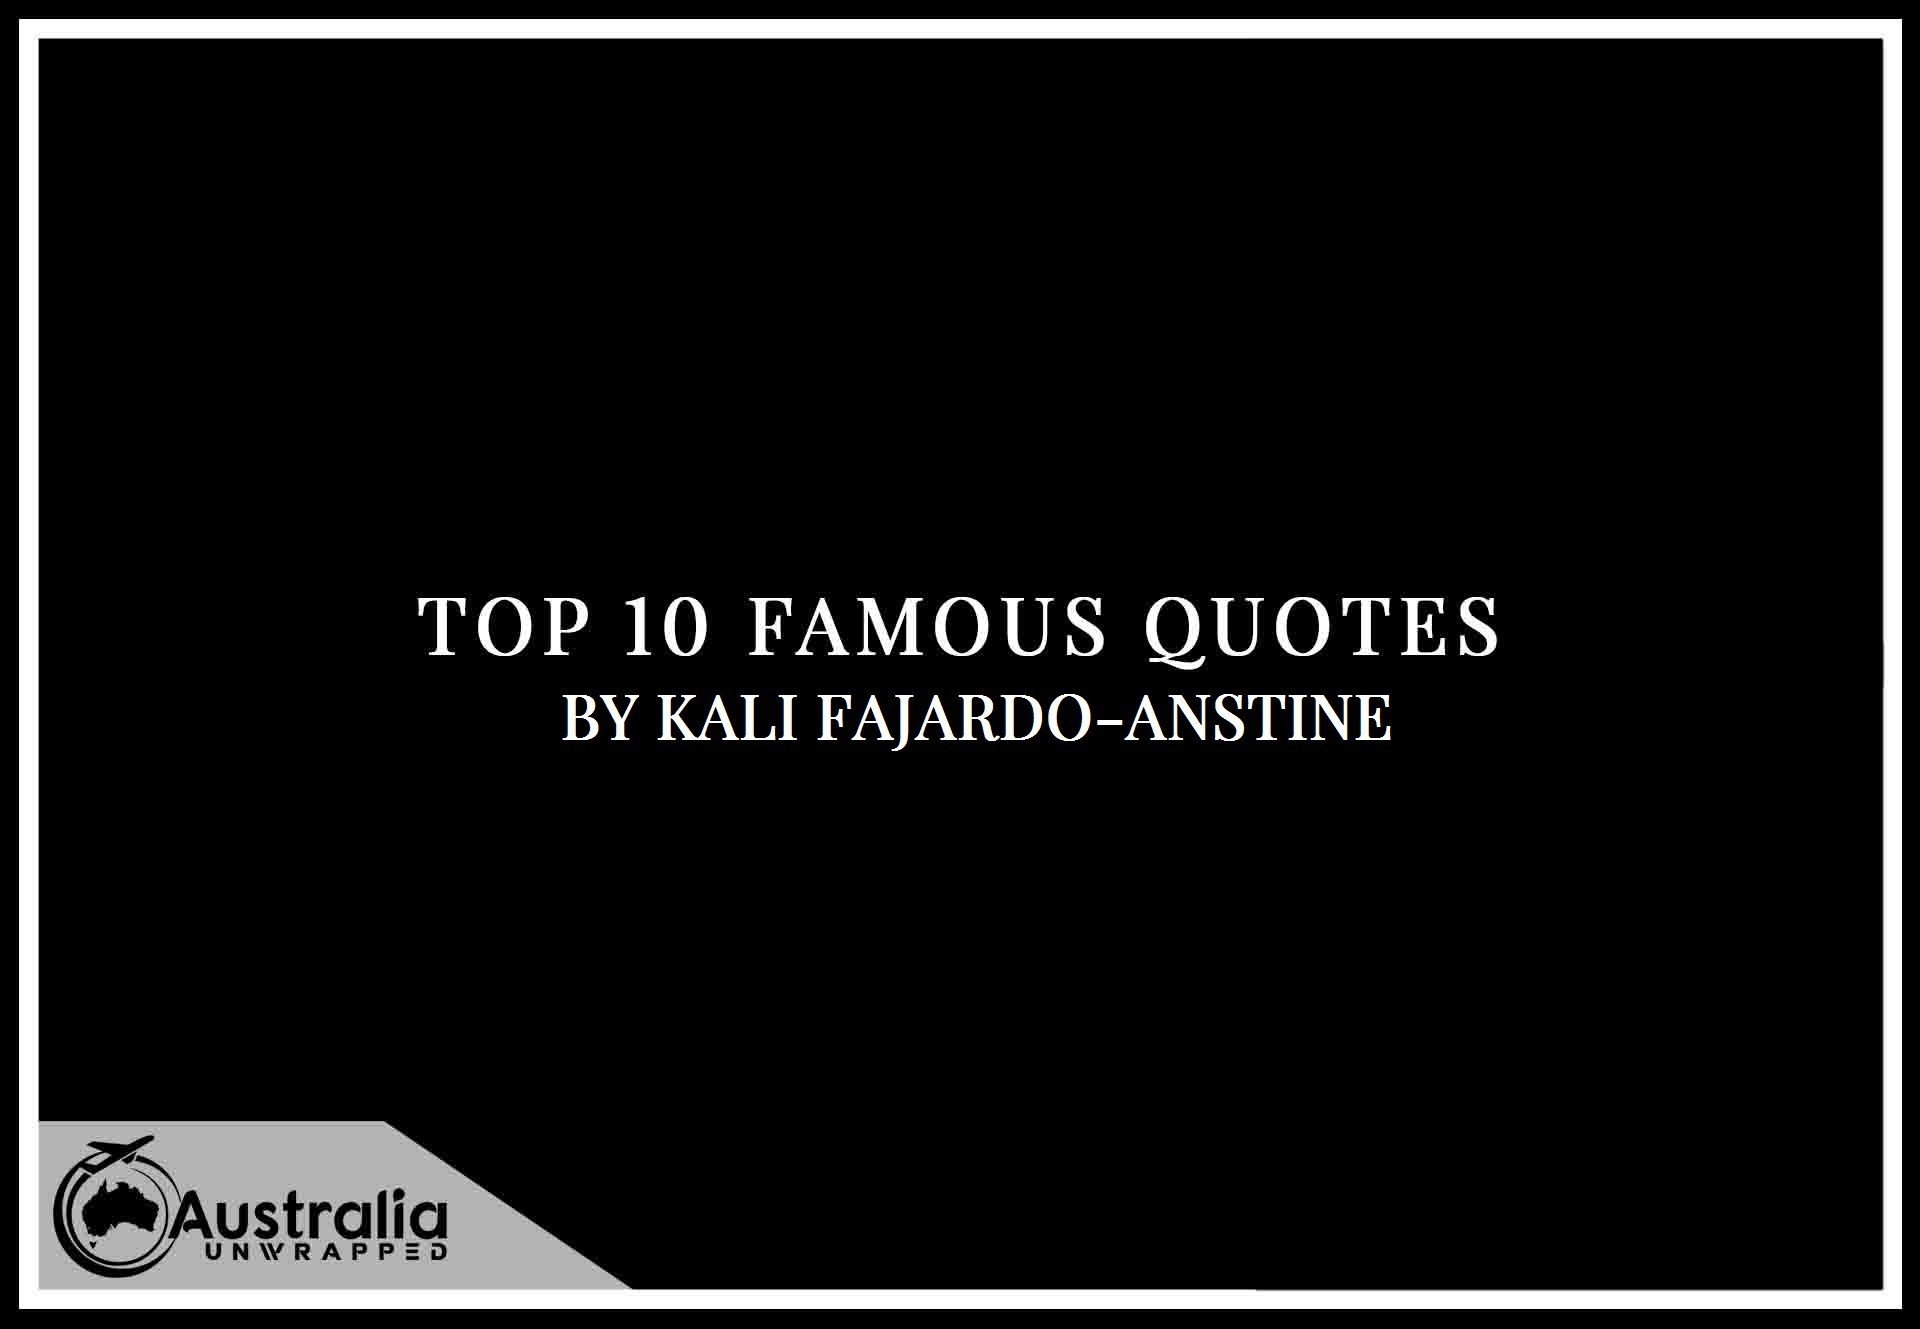 Kali Fajardo-Anstine’s Top 10 Popular and Famous Quotes